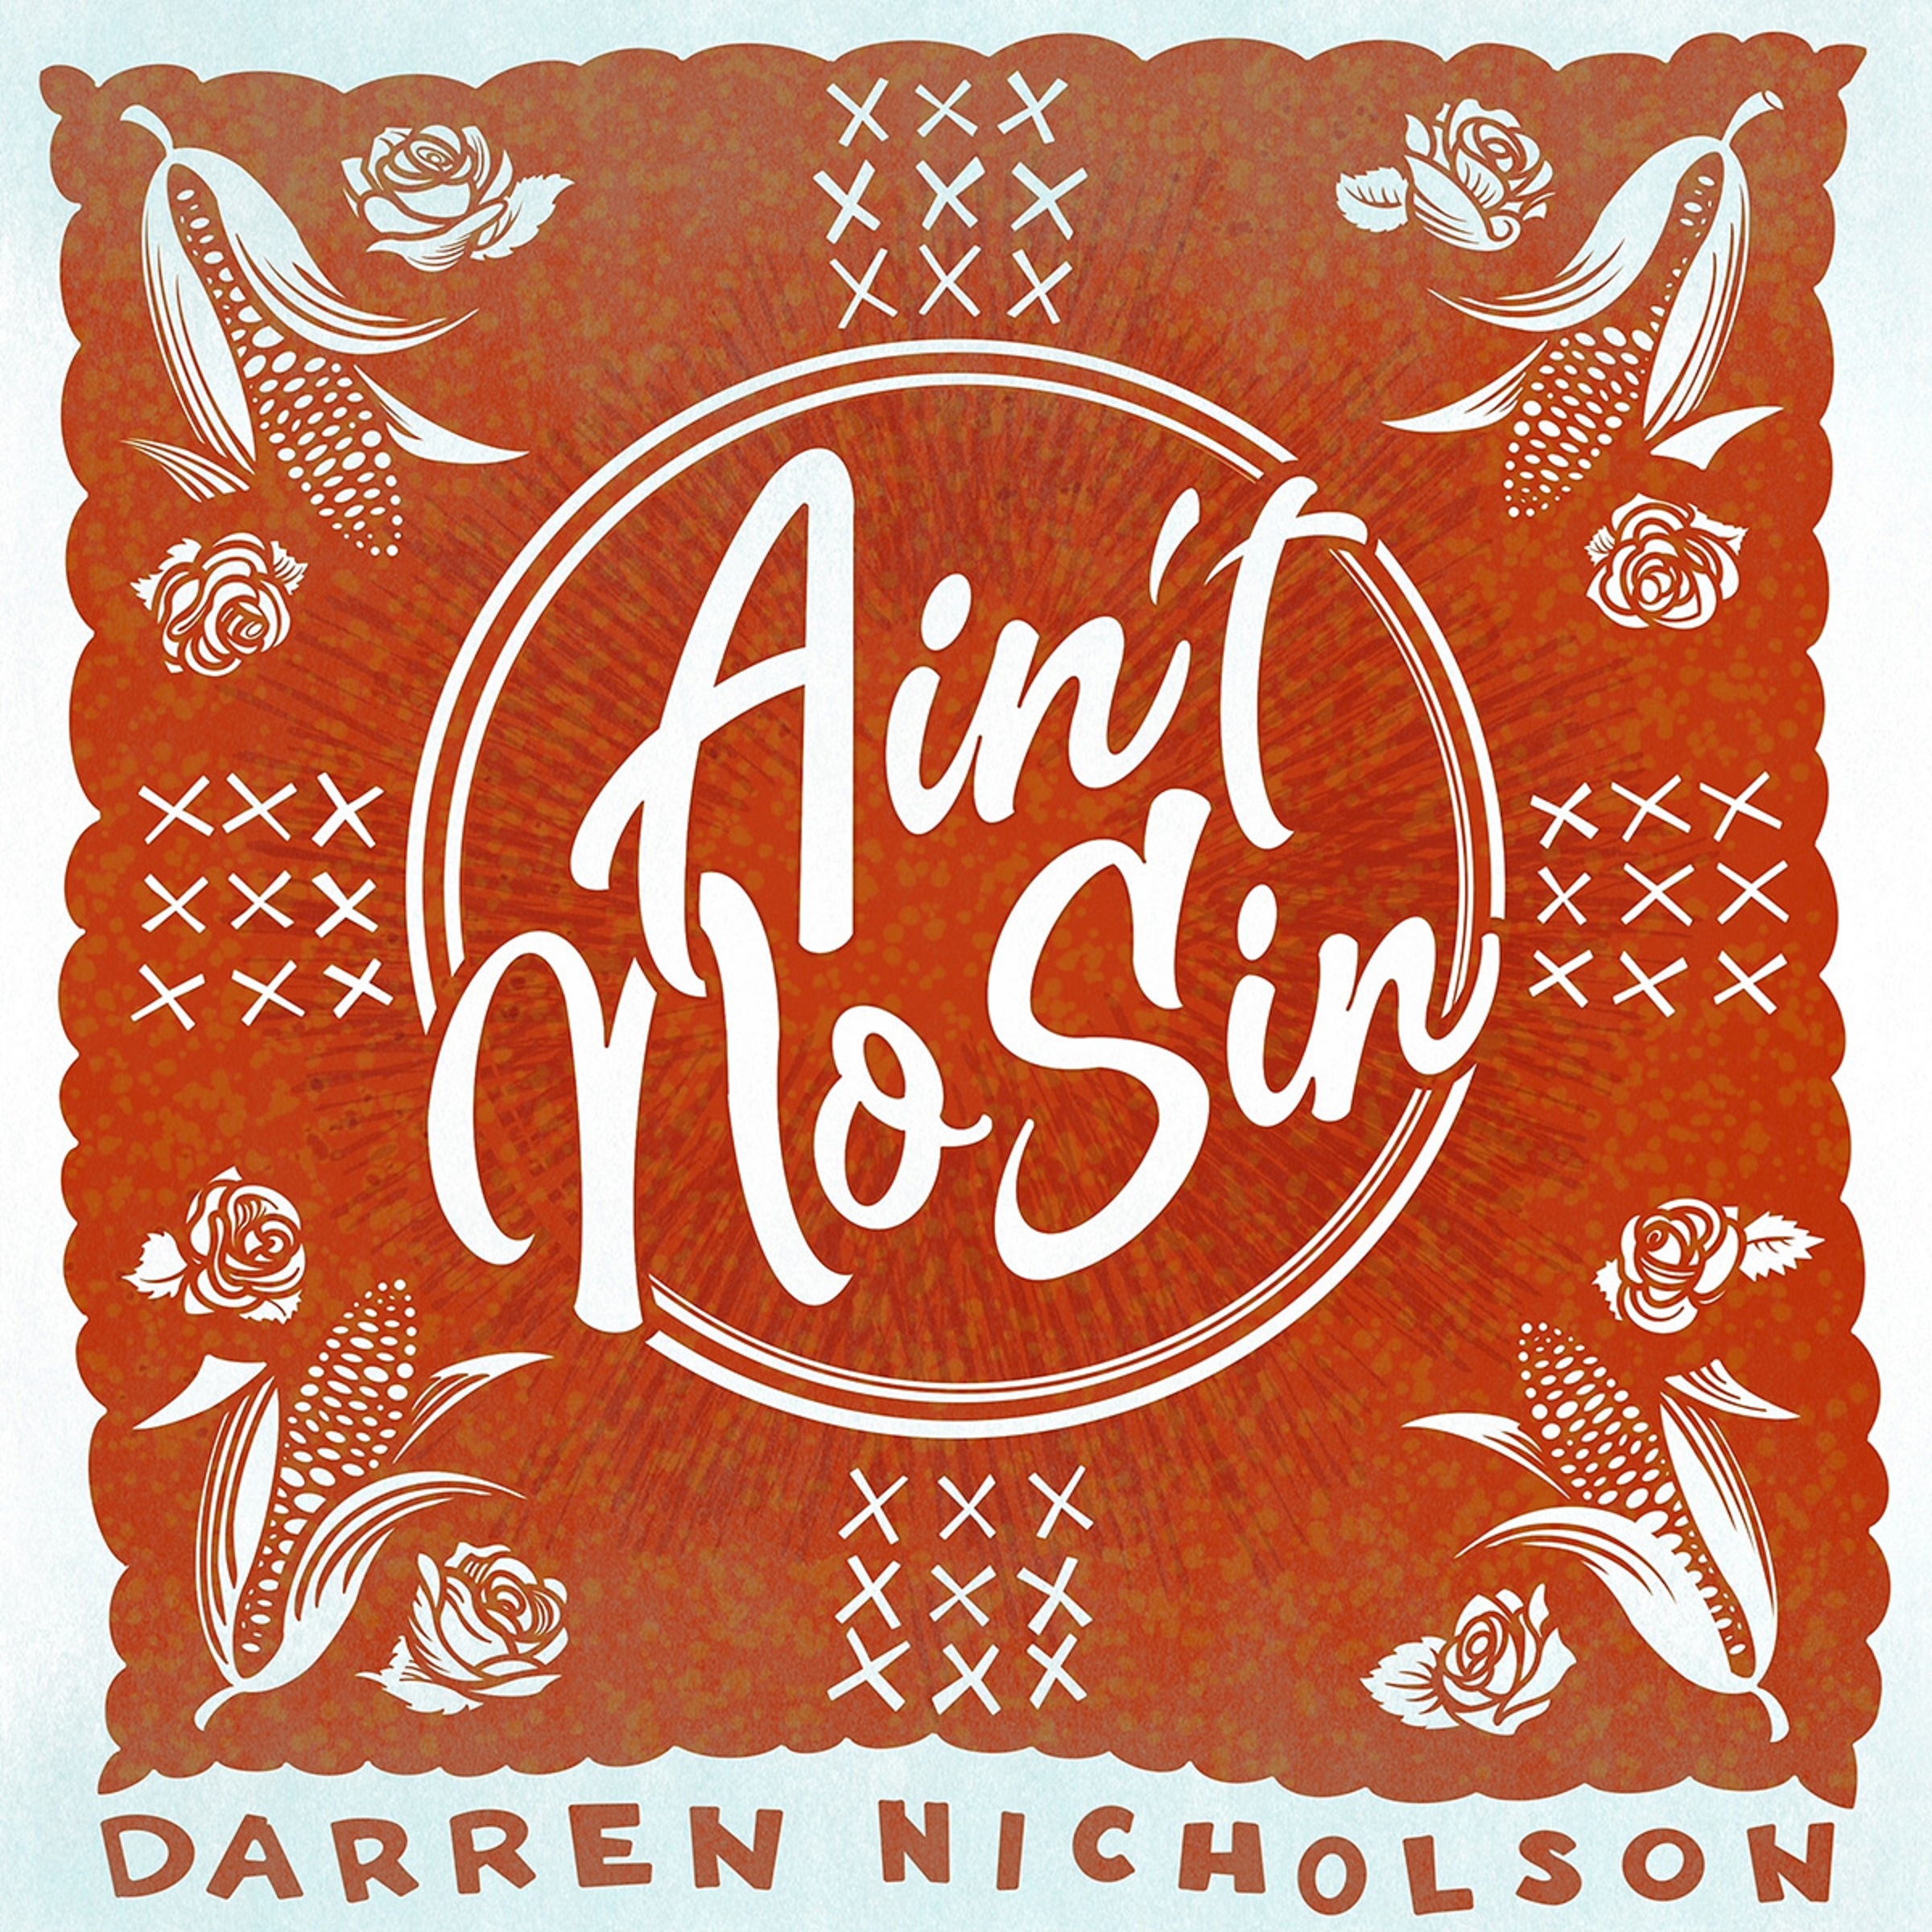 Darren Nicholson’s “Ain’t No Sin” is a tongue-in-cheek tale